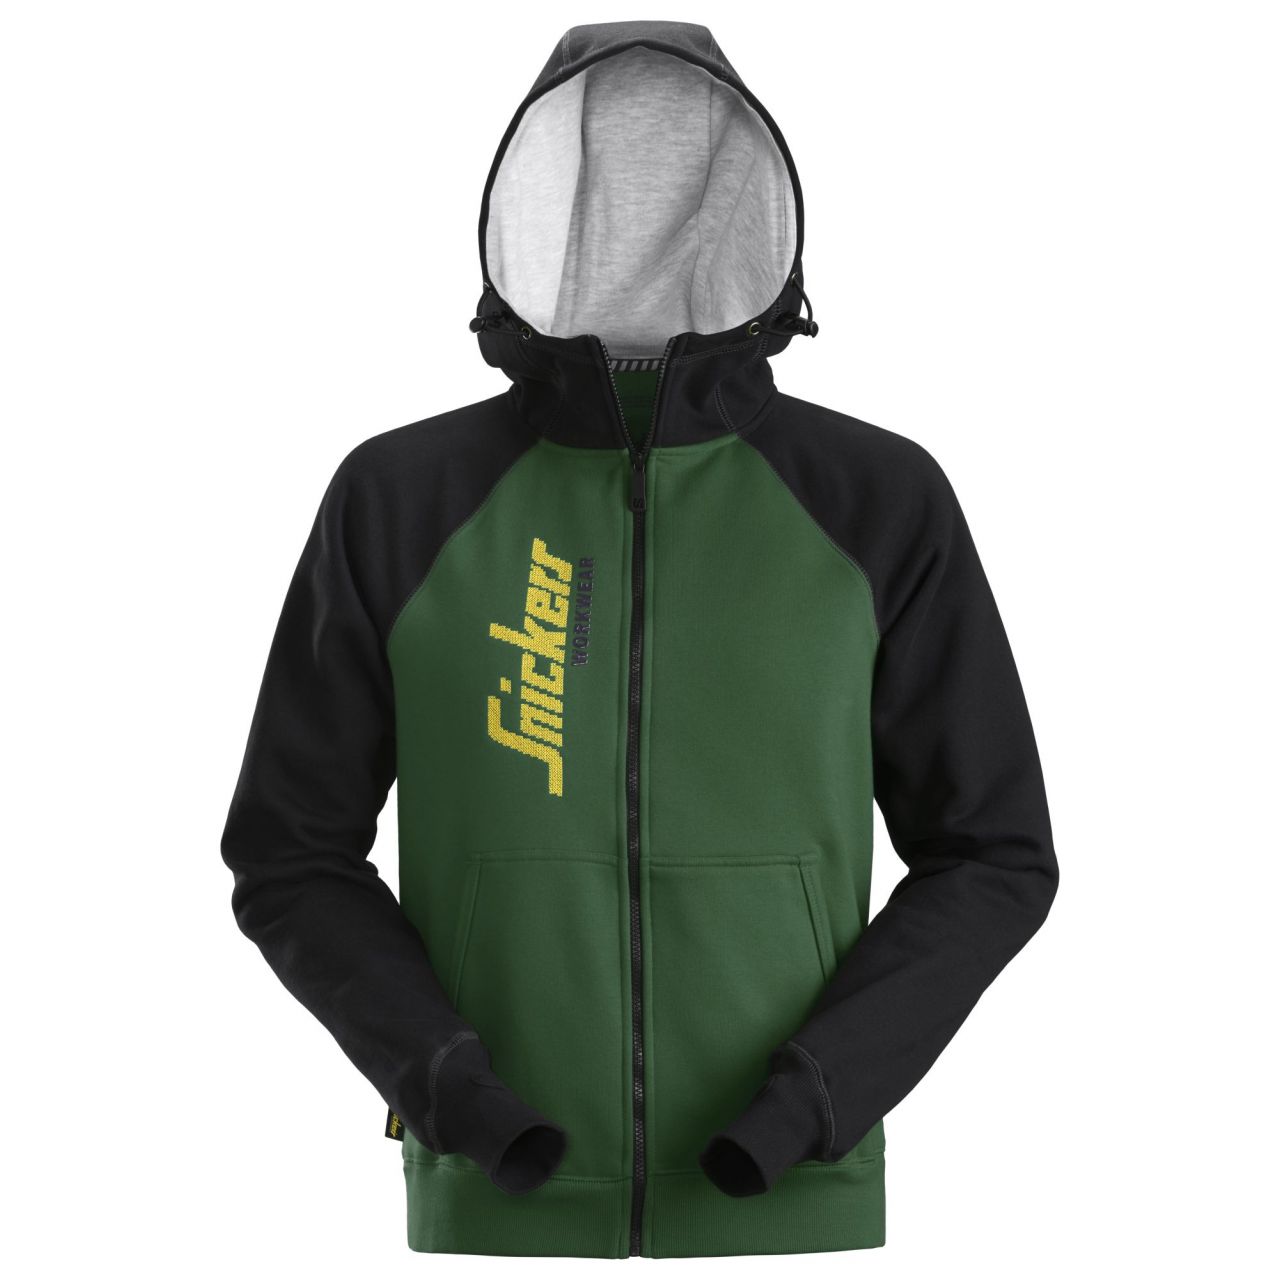 Sudadera con capucha con cremallera completa y logotipo Verde bosque/Negra talla XS